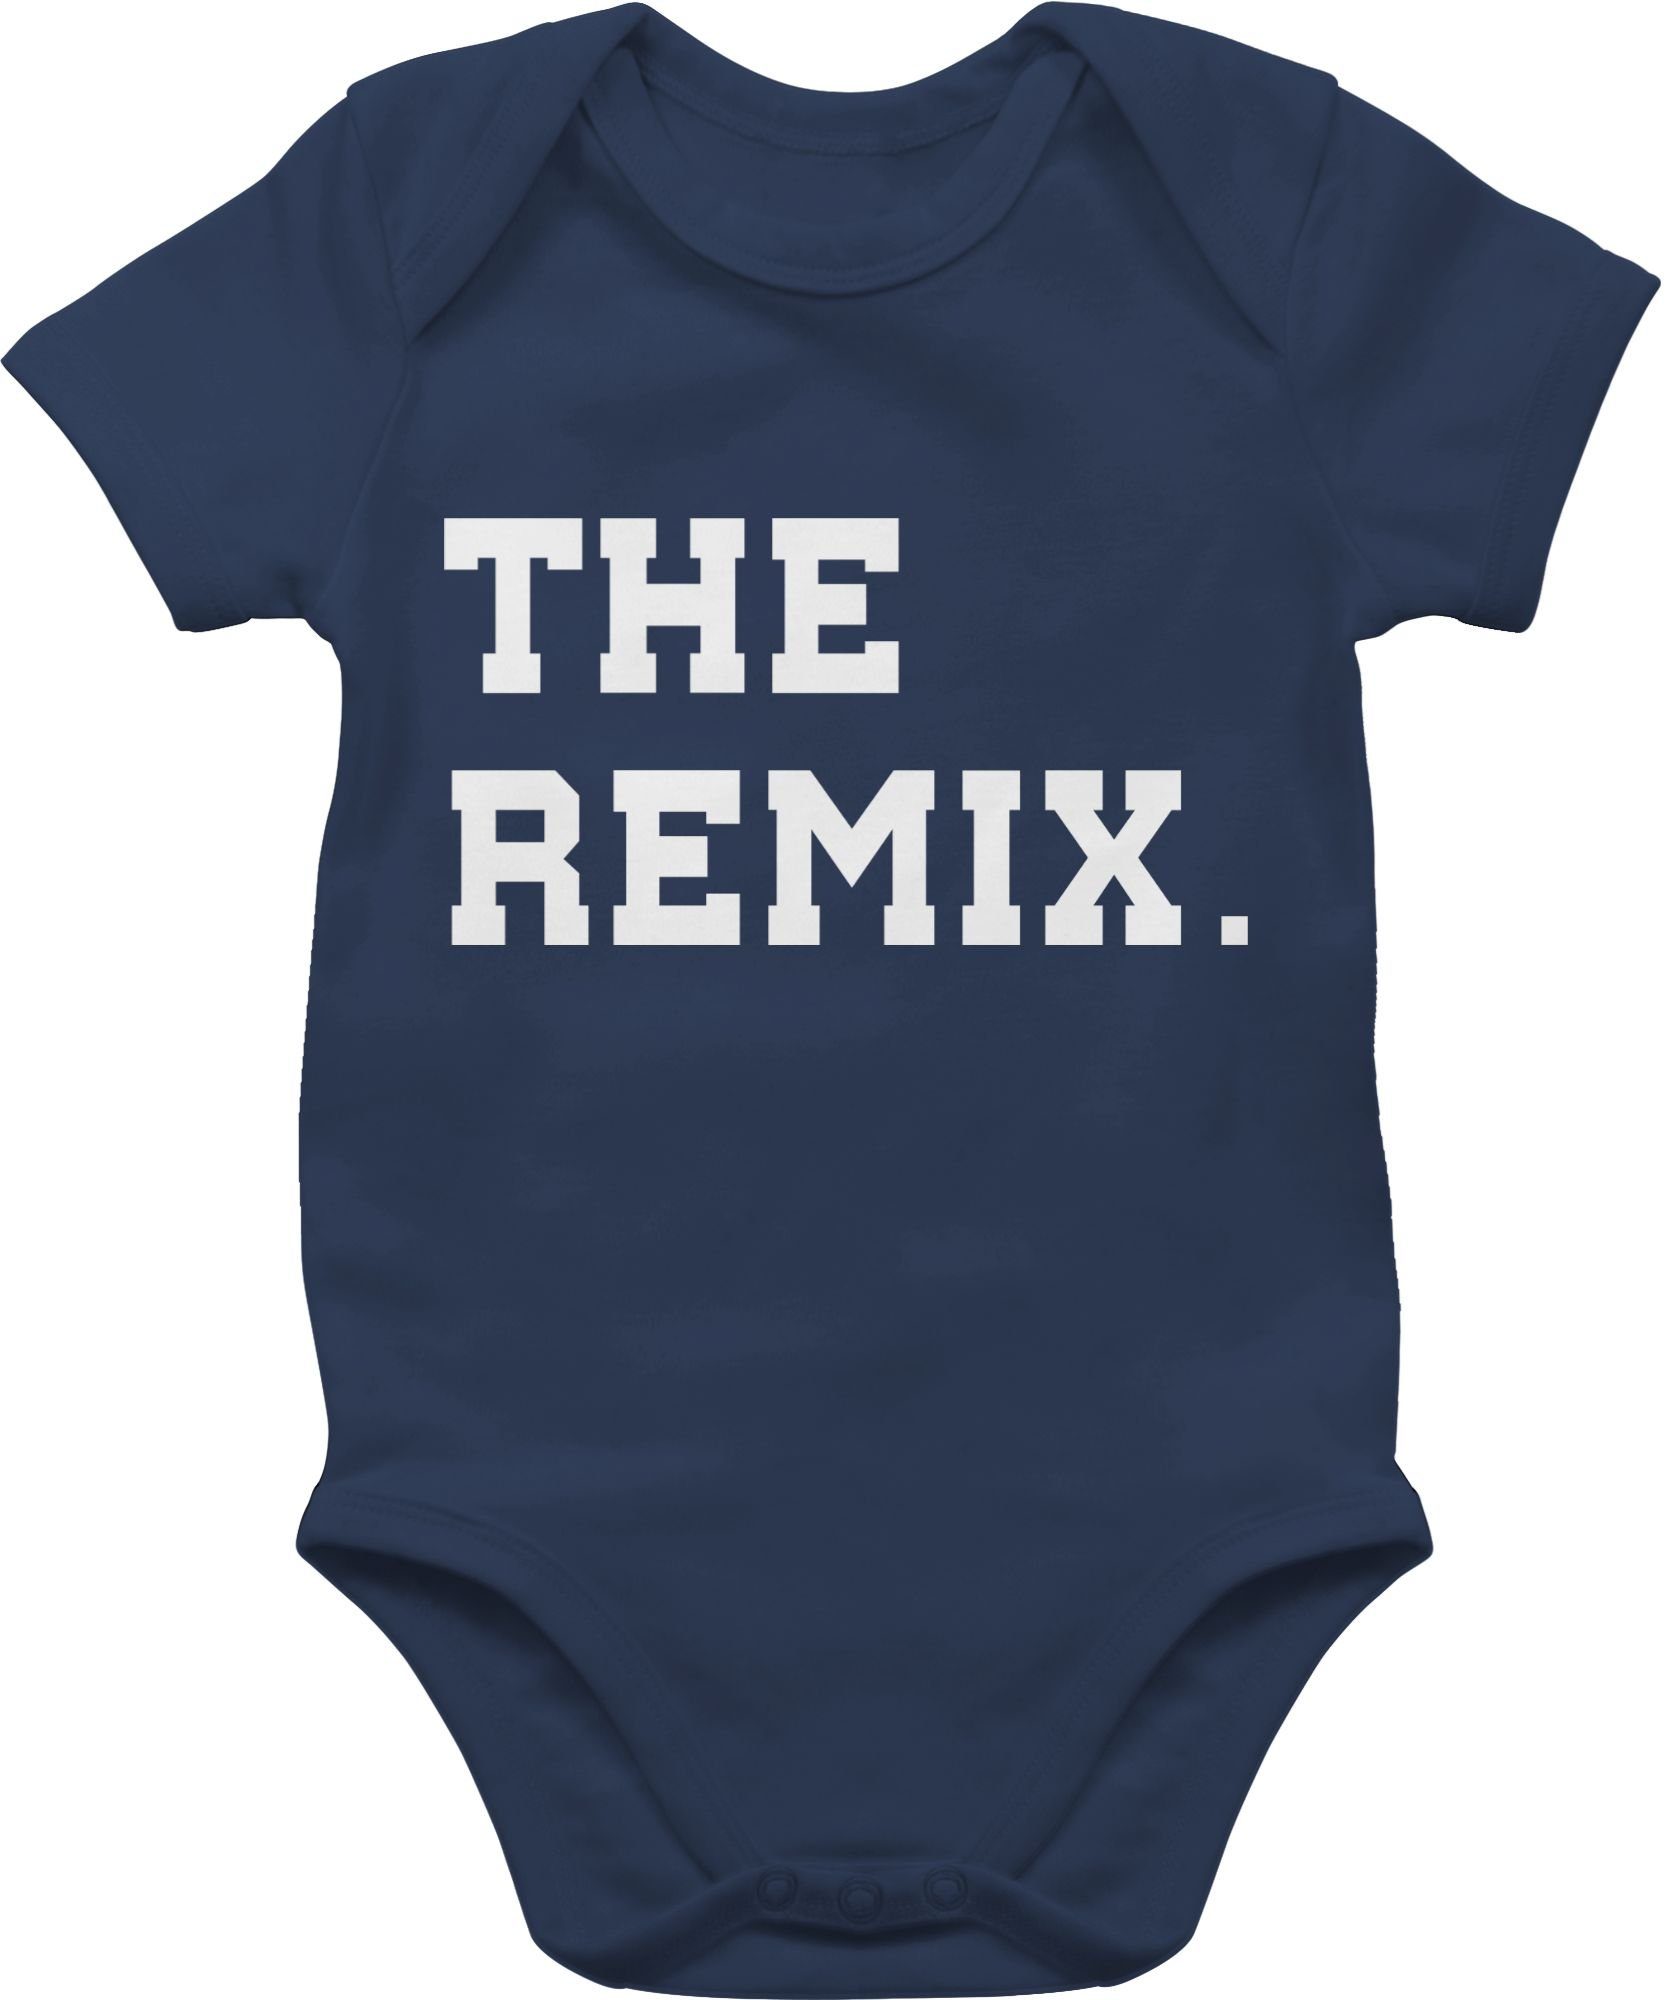 Shirtracer Shirtbody The Partner-Look Kind Navy Blau 2 Familie The Remix Baby Original